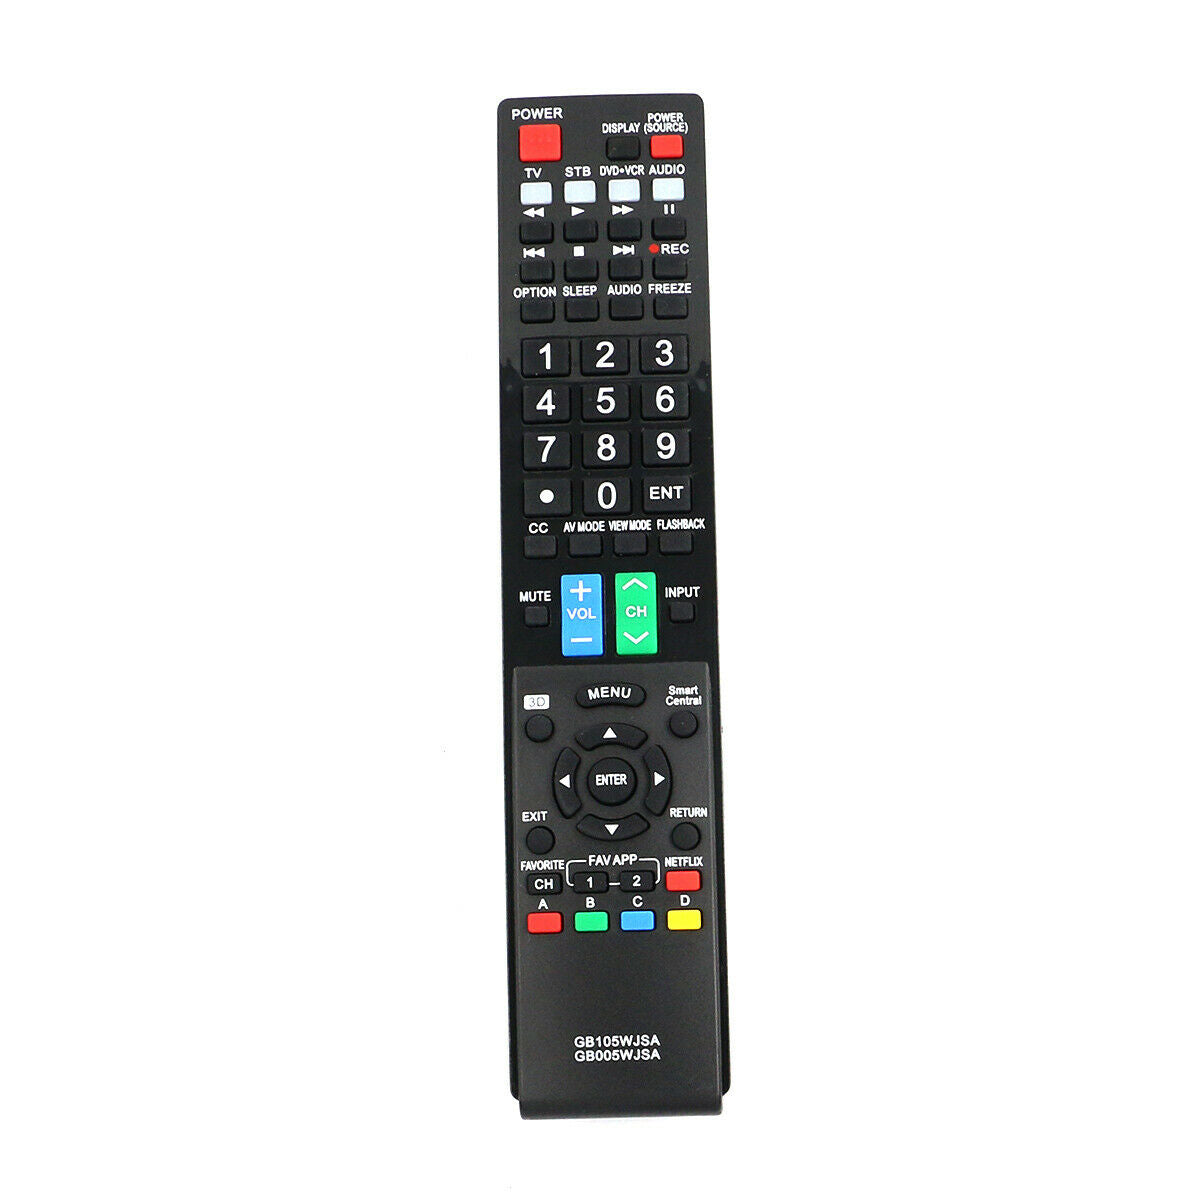 GB005WJSA GB105WJSA Replacement Remote Control for Sharp TV